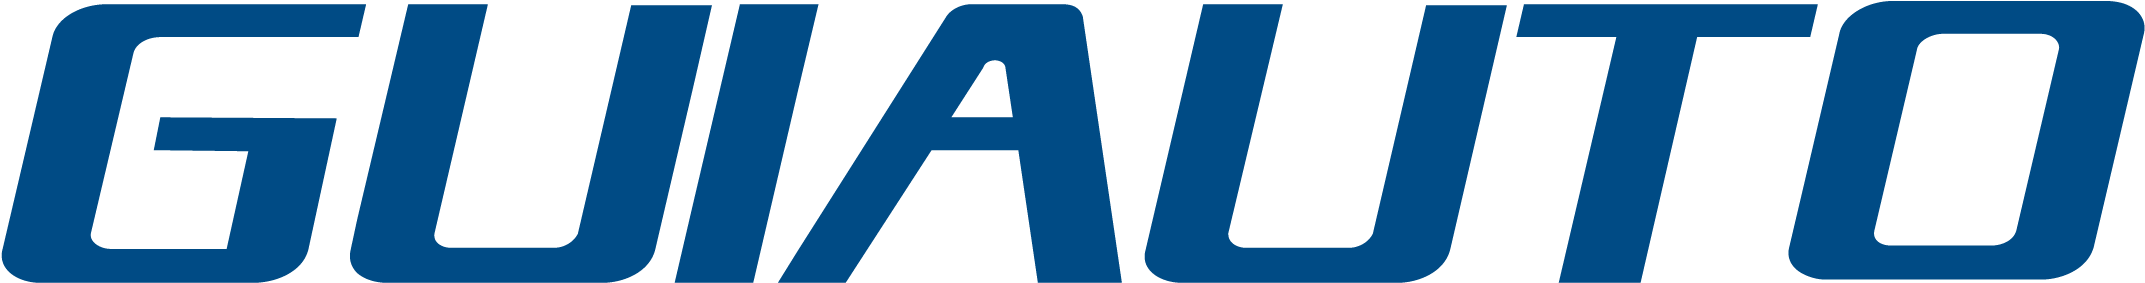 Logo Guiauto-01 - Kick American Football (2233x329)